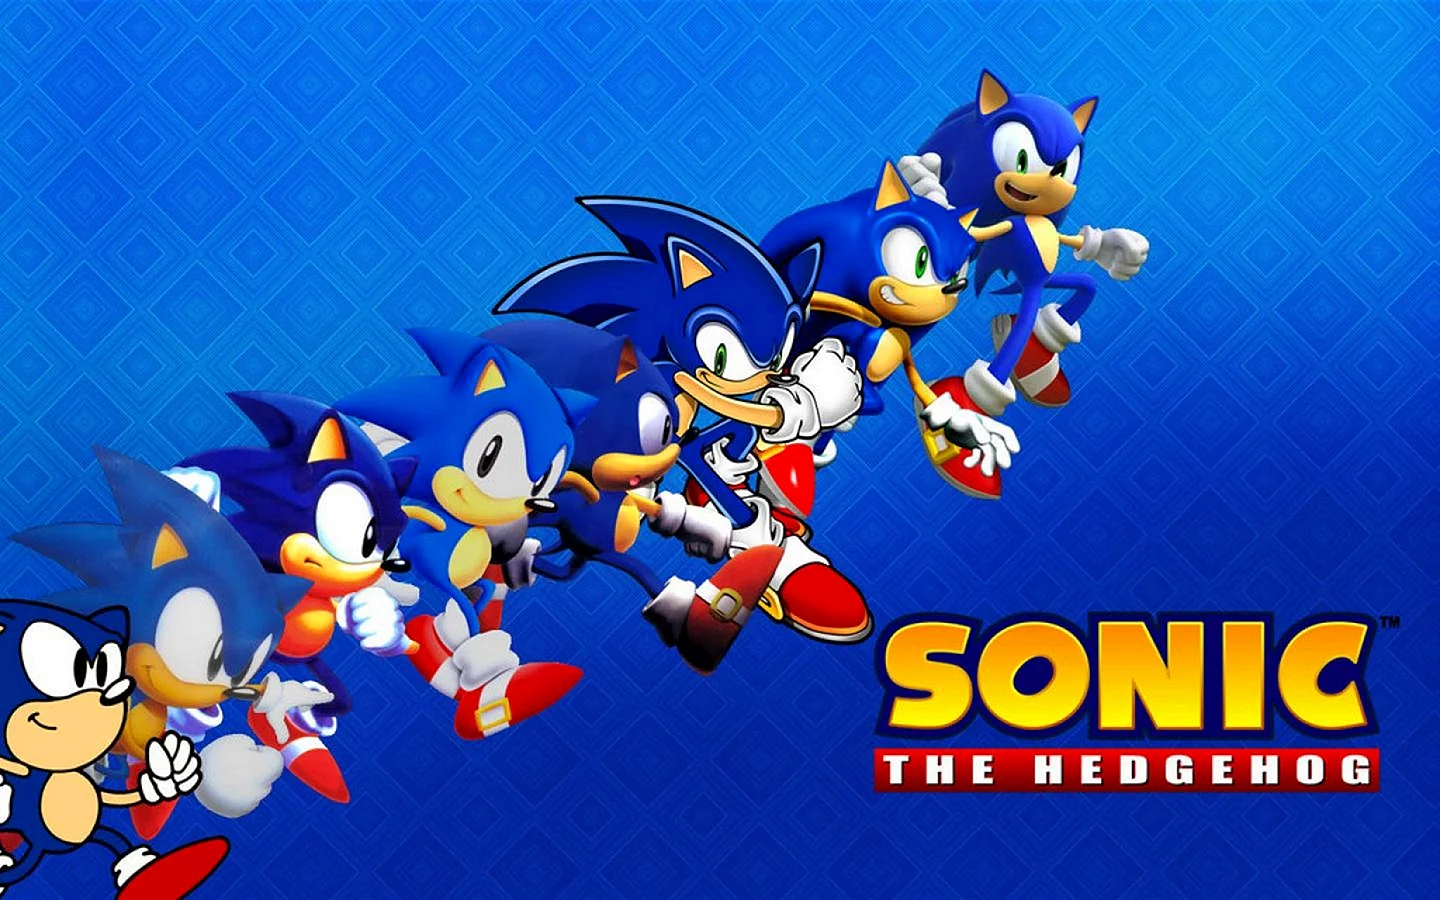 Sonic The Hedgehog 2020 Wallpaper